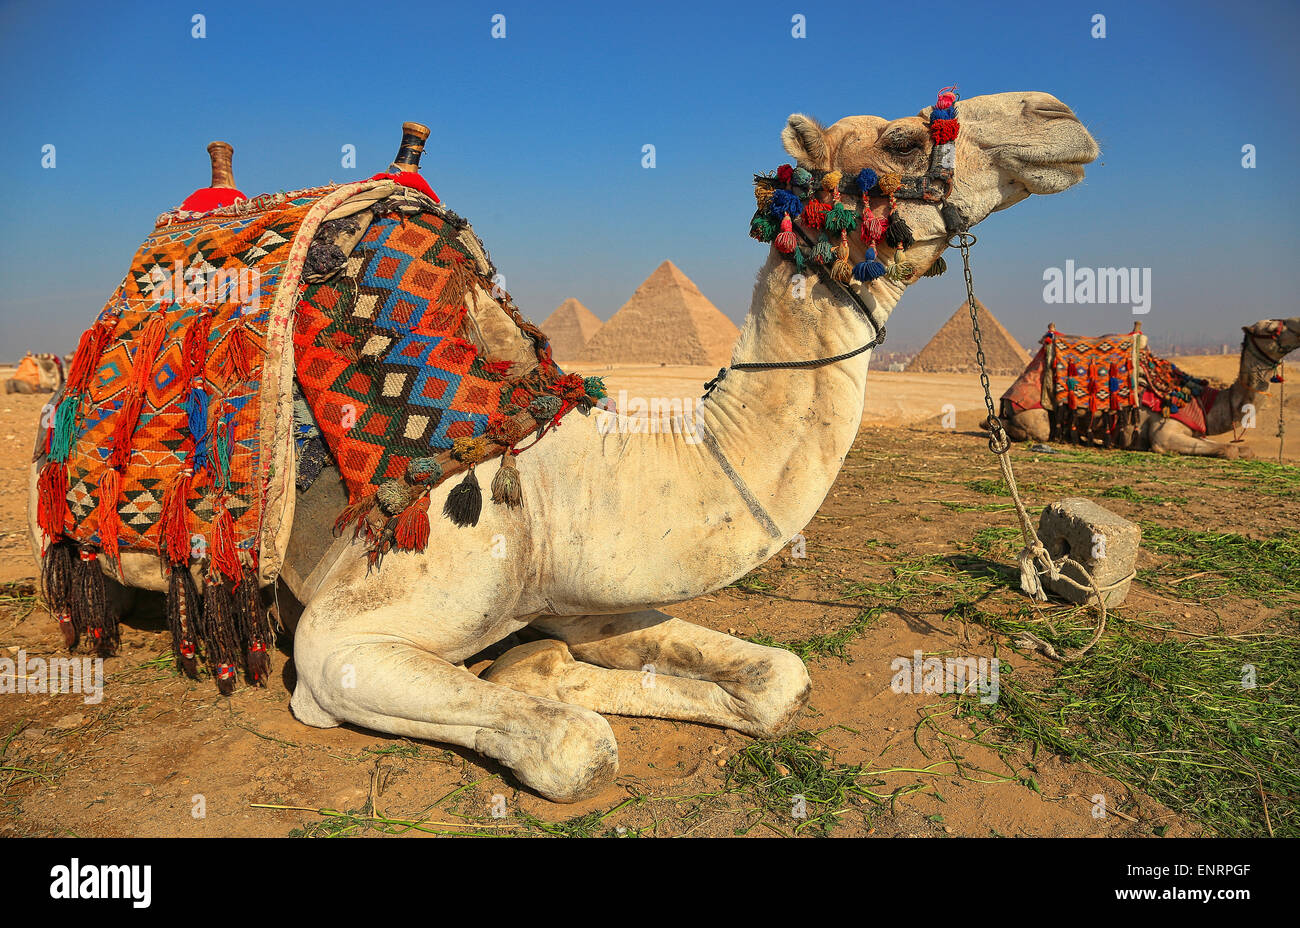 Camel by the pyramid of Giza. Stock Photo